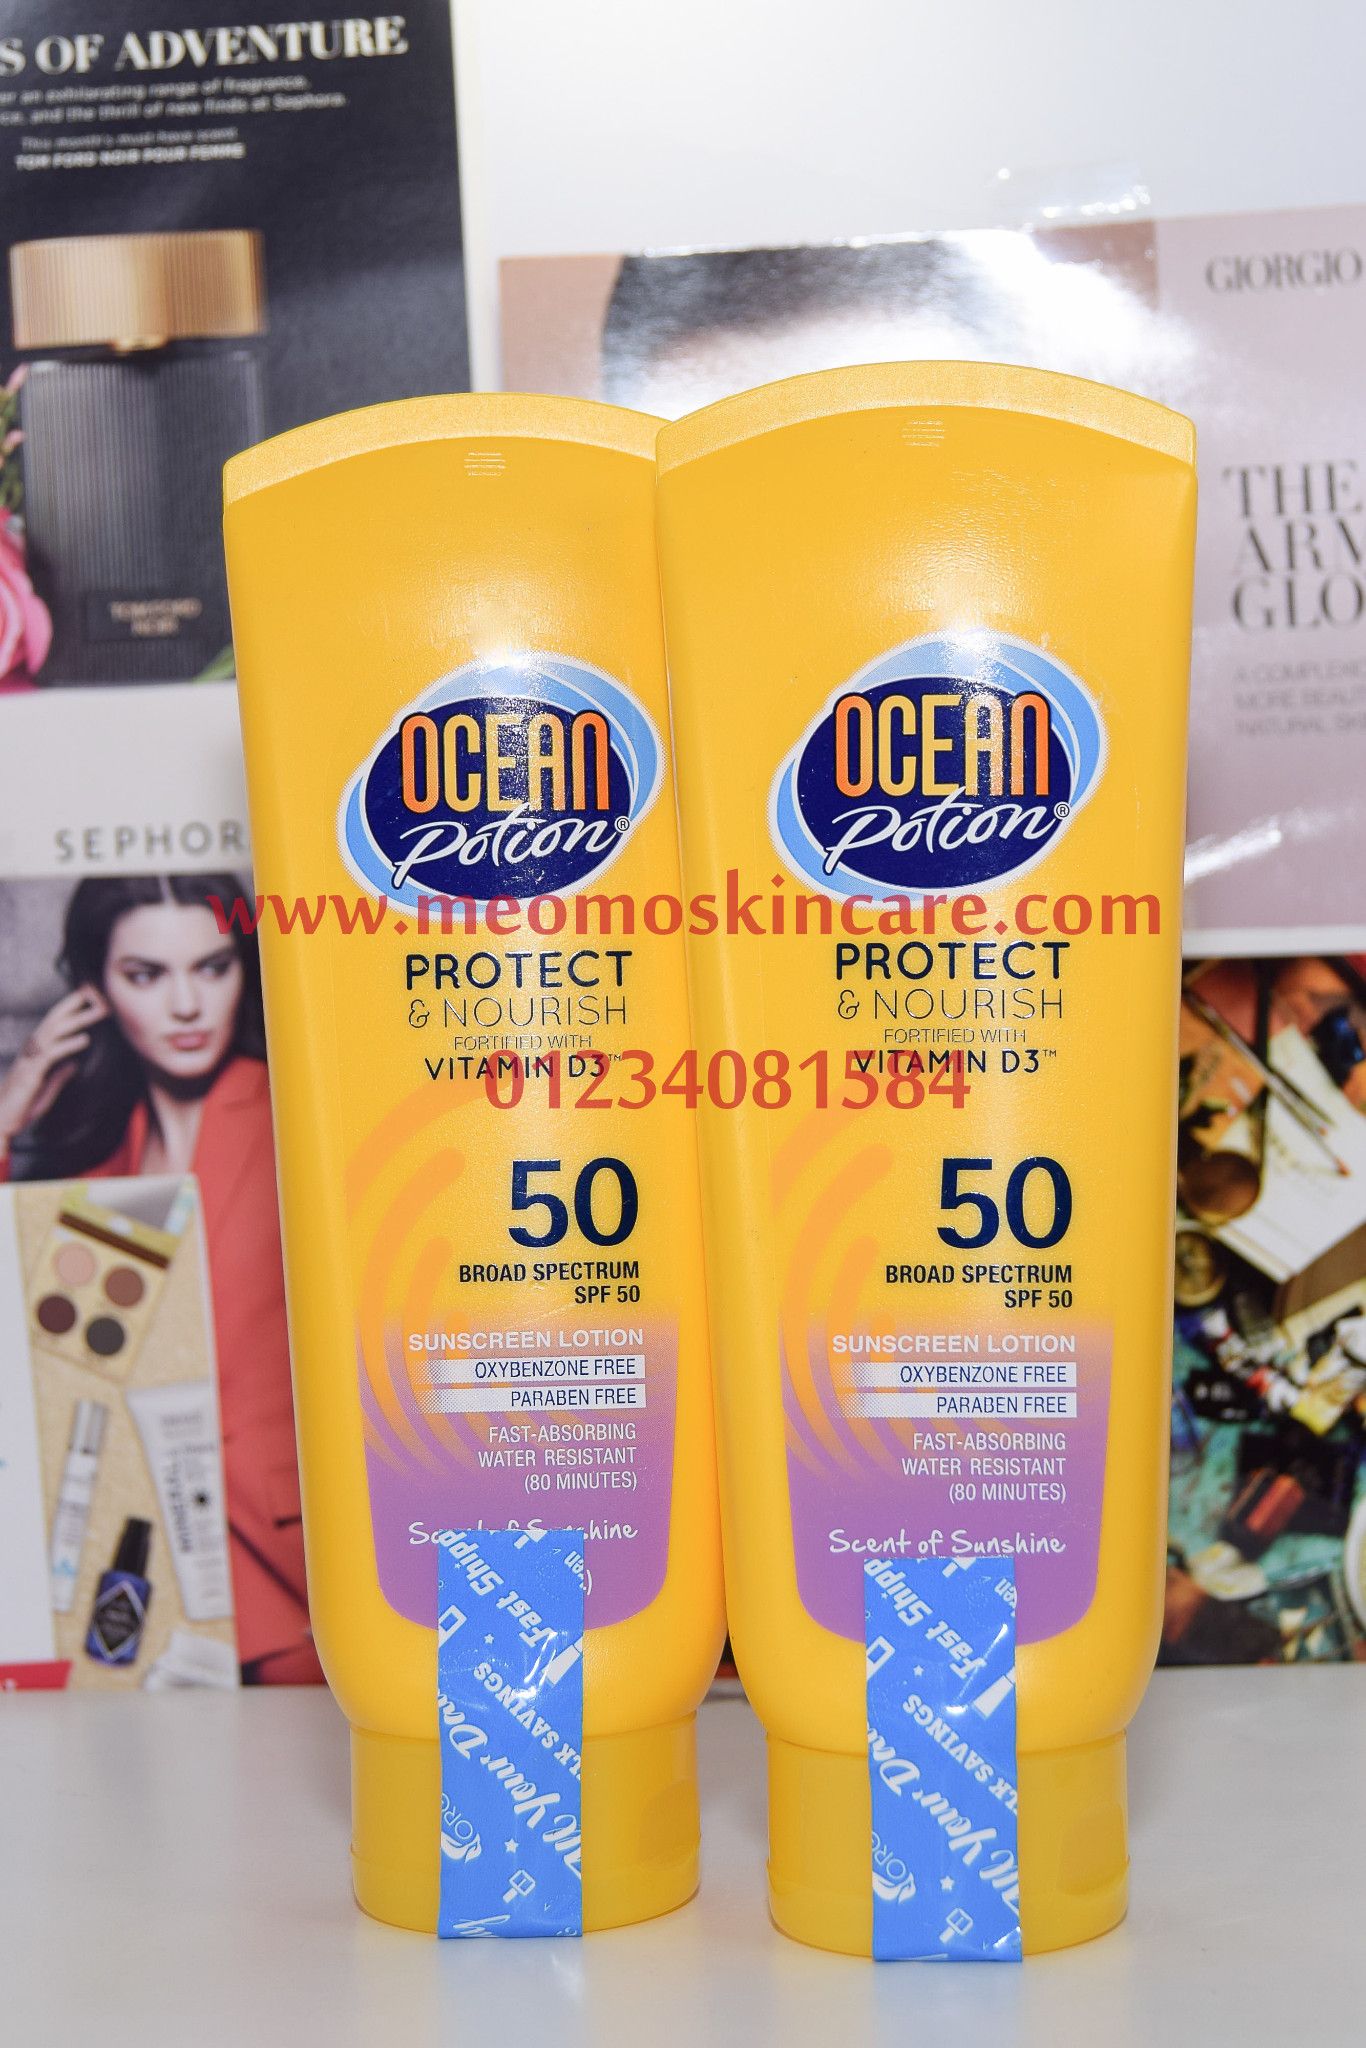 Ocean Potion Suncare Protect & Nourish Sunscreen SPF 50 8 oz